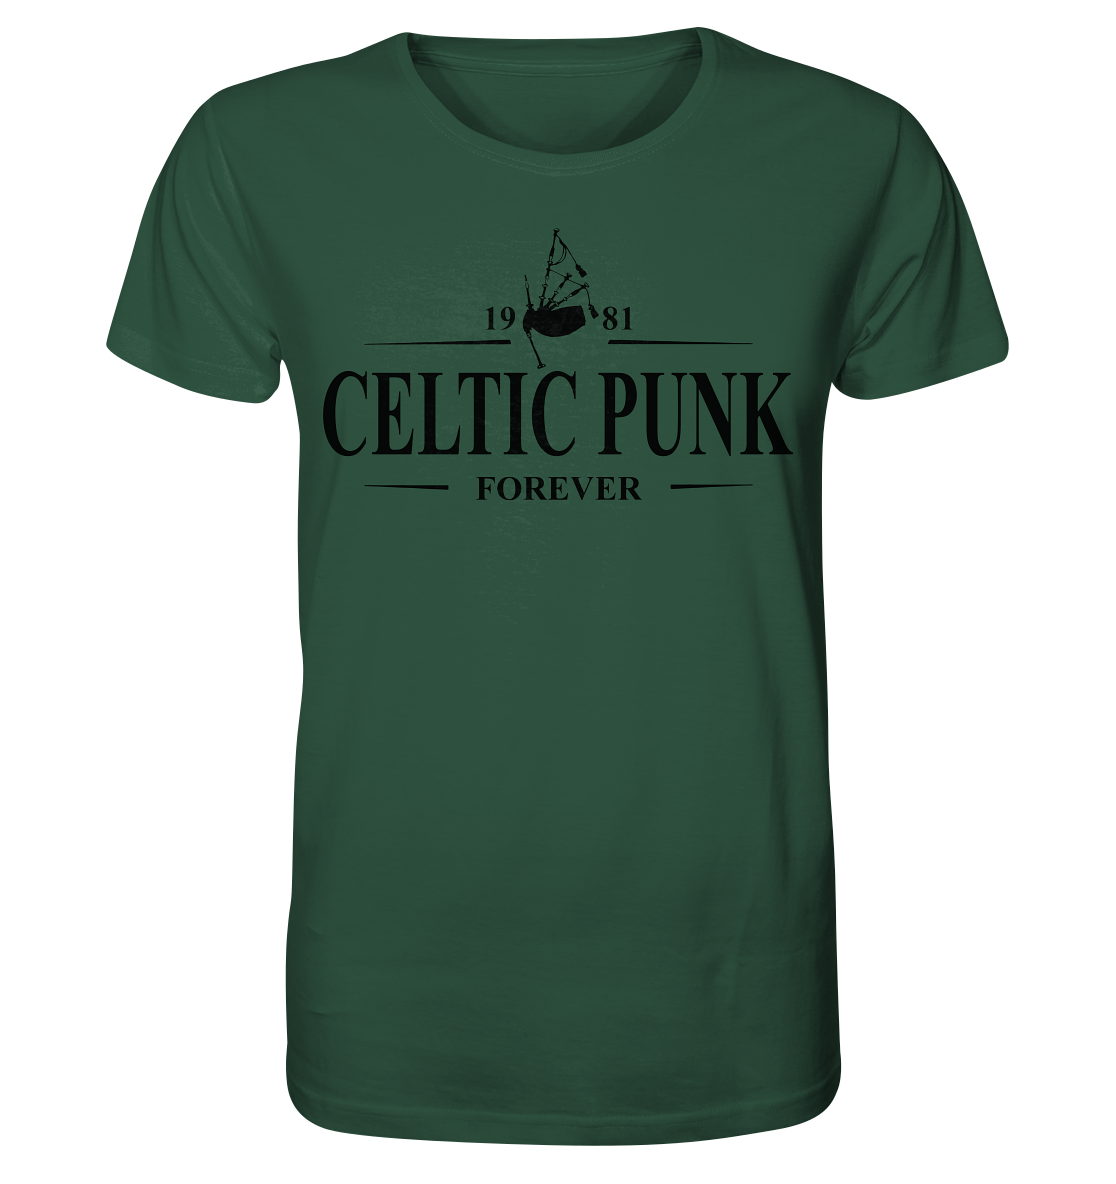 Celtic Punk "Forever" - Organic Shirt